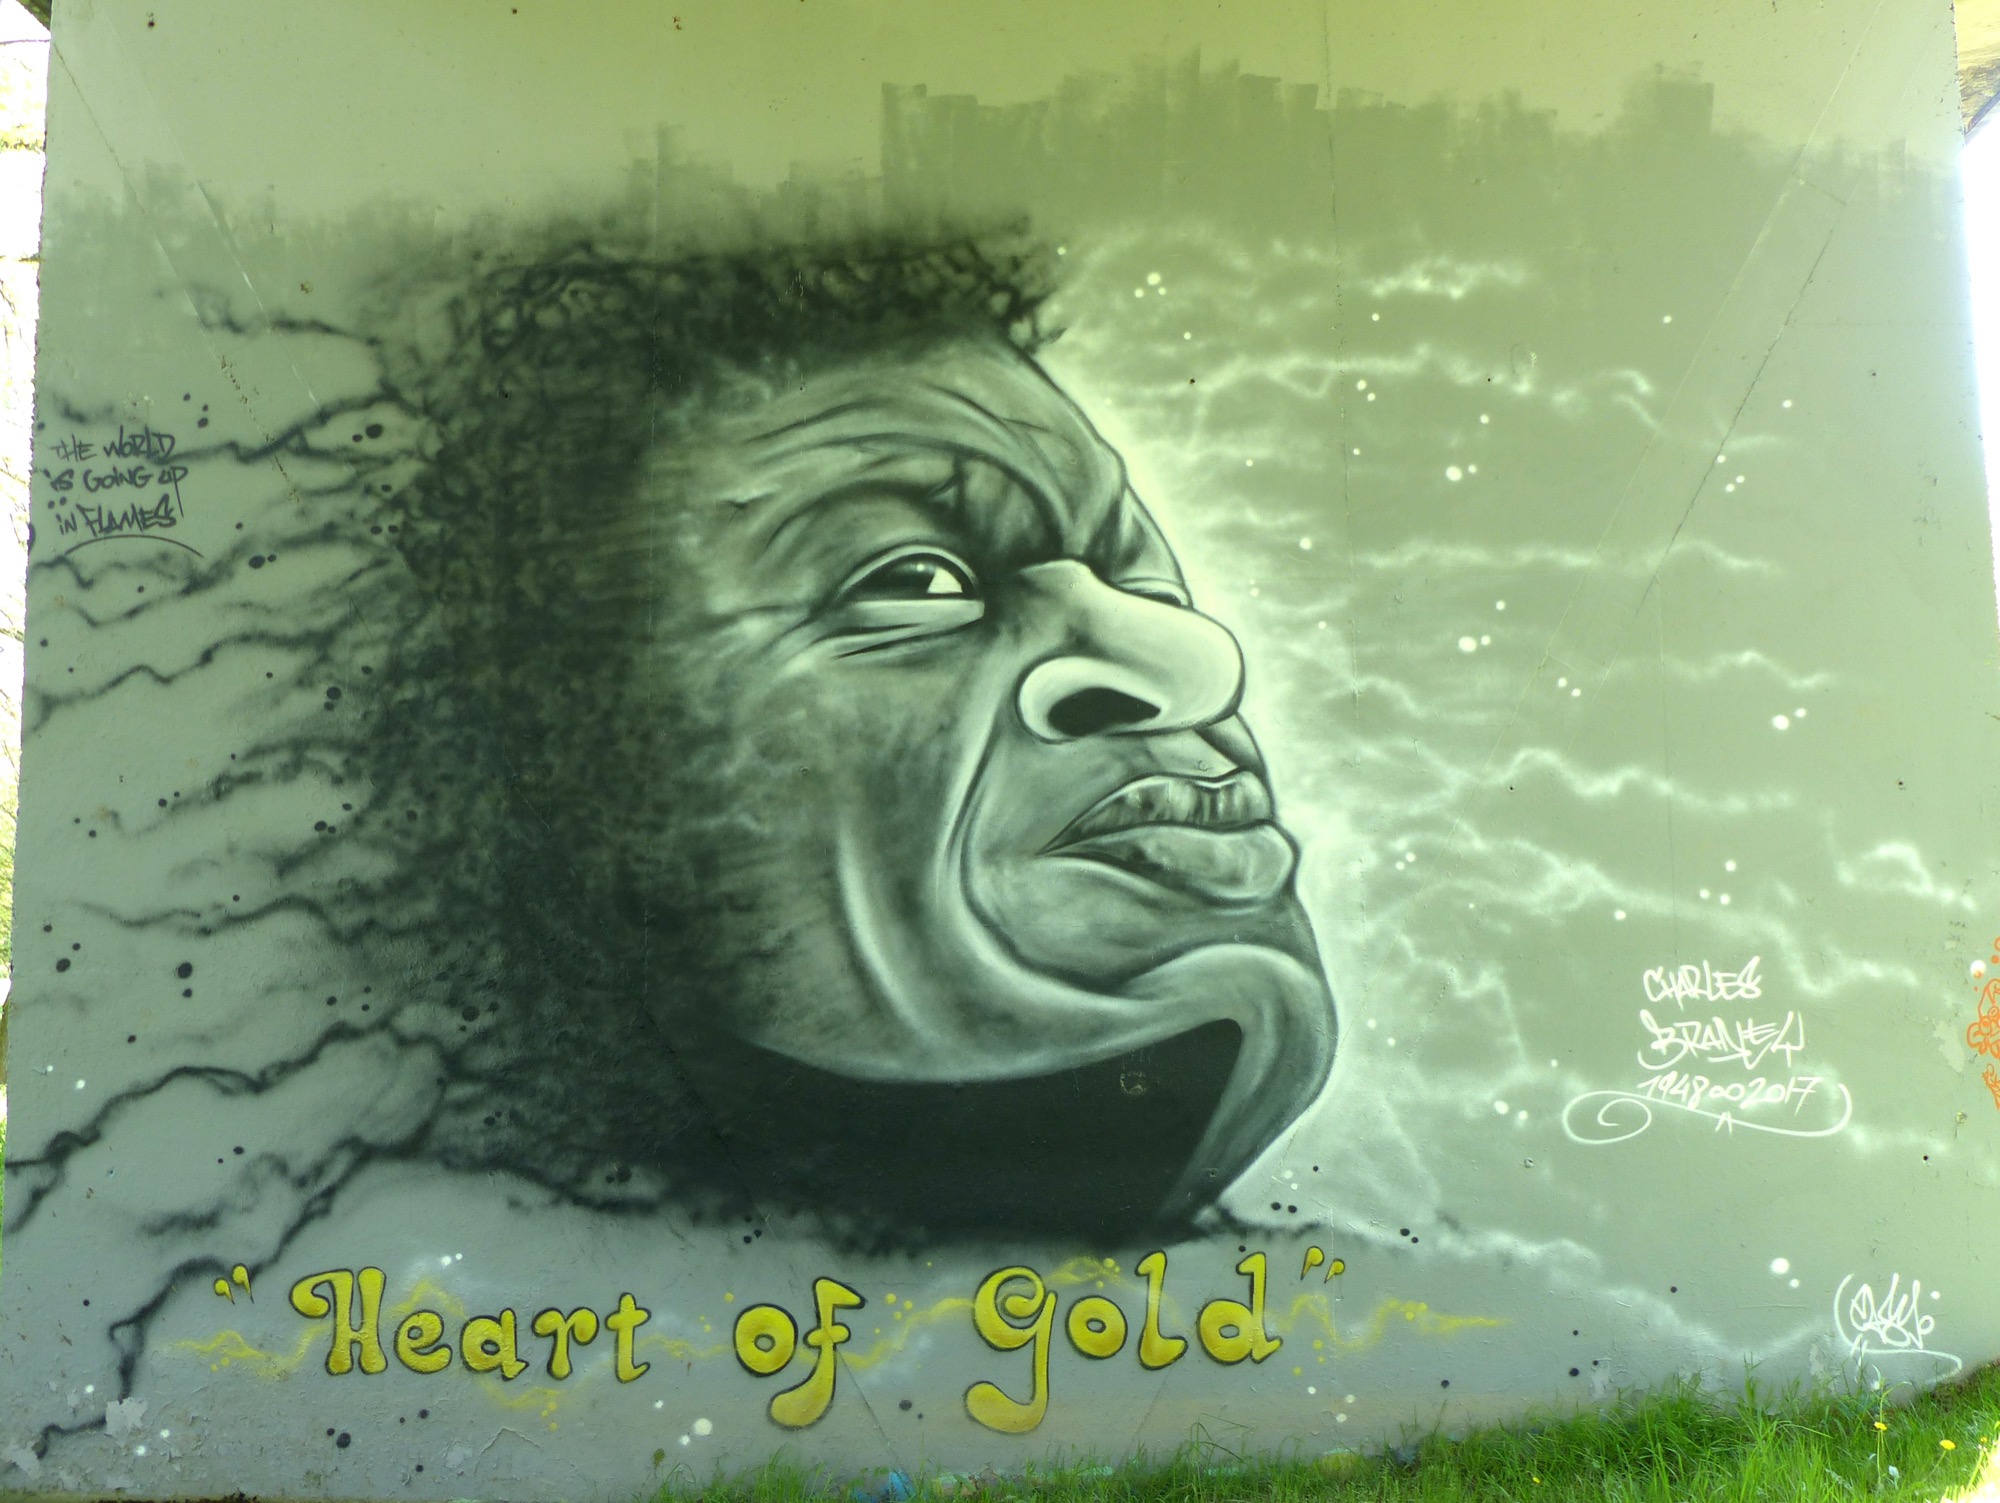 Graffiti 49 Heart of gold captured by Rabot in Rezé France